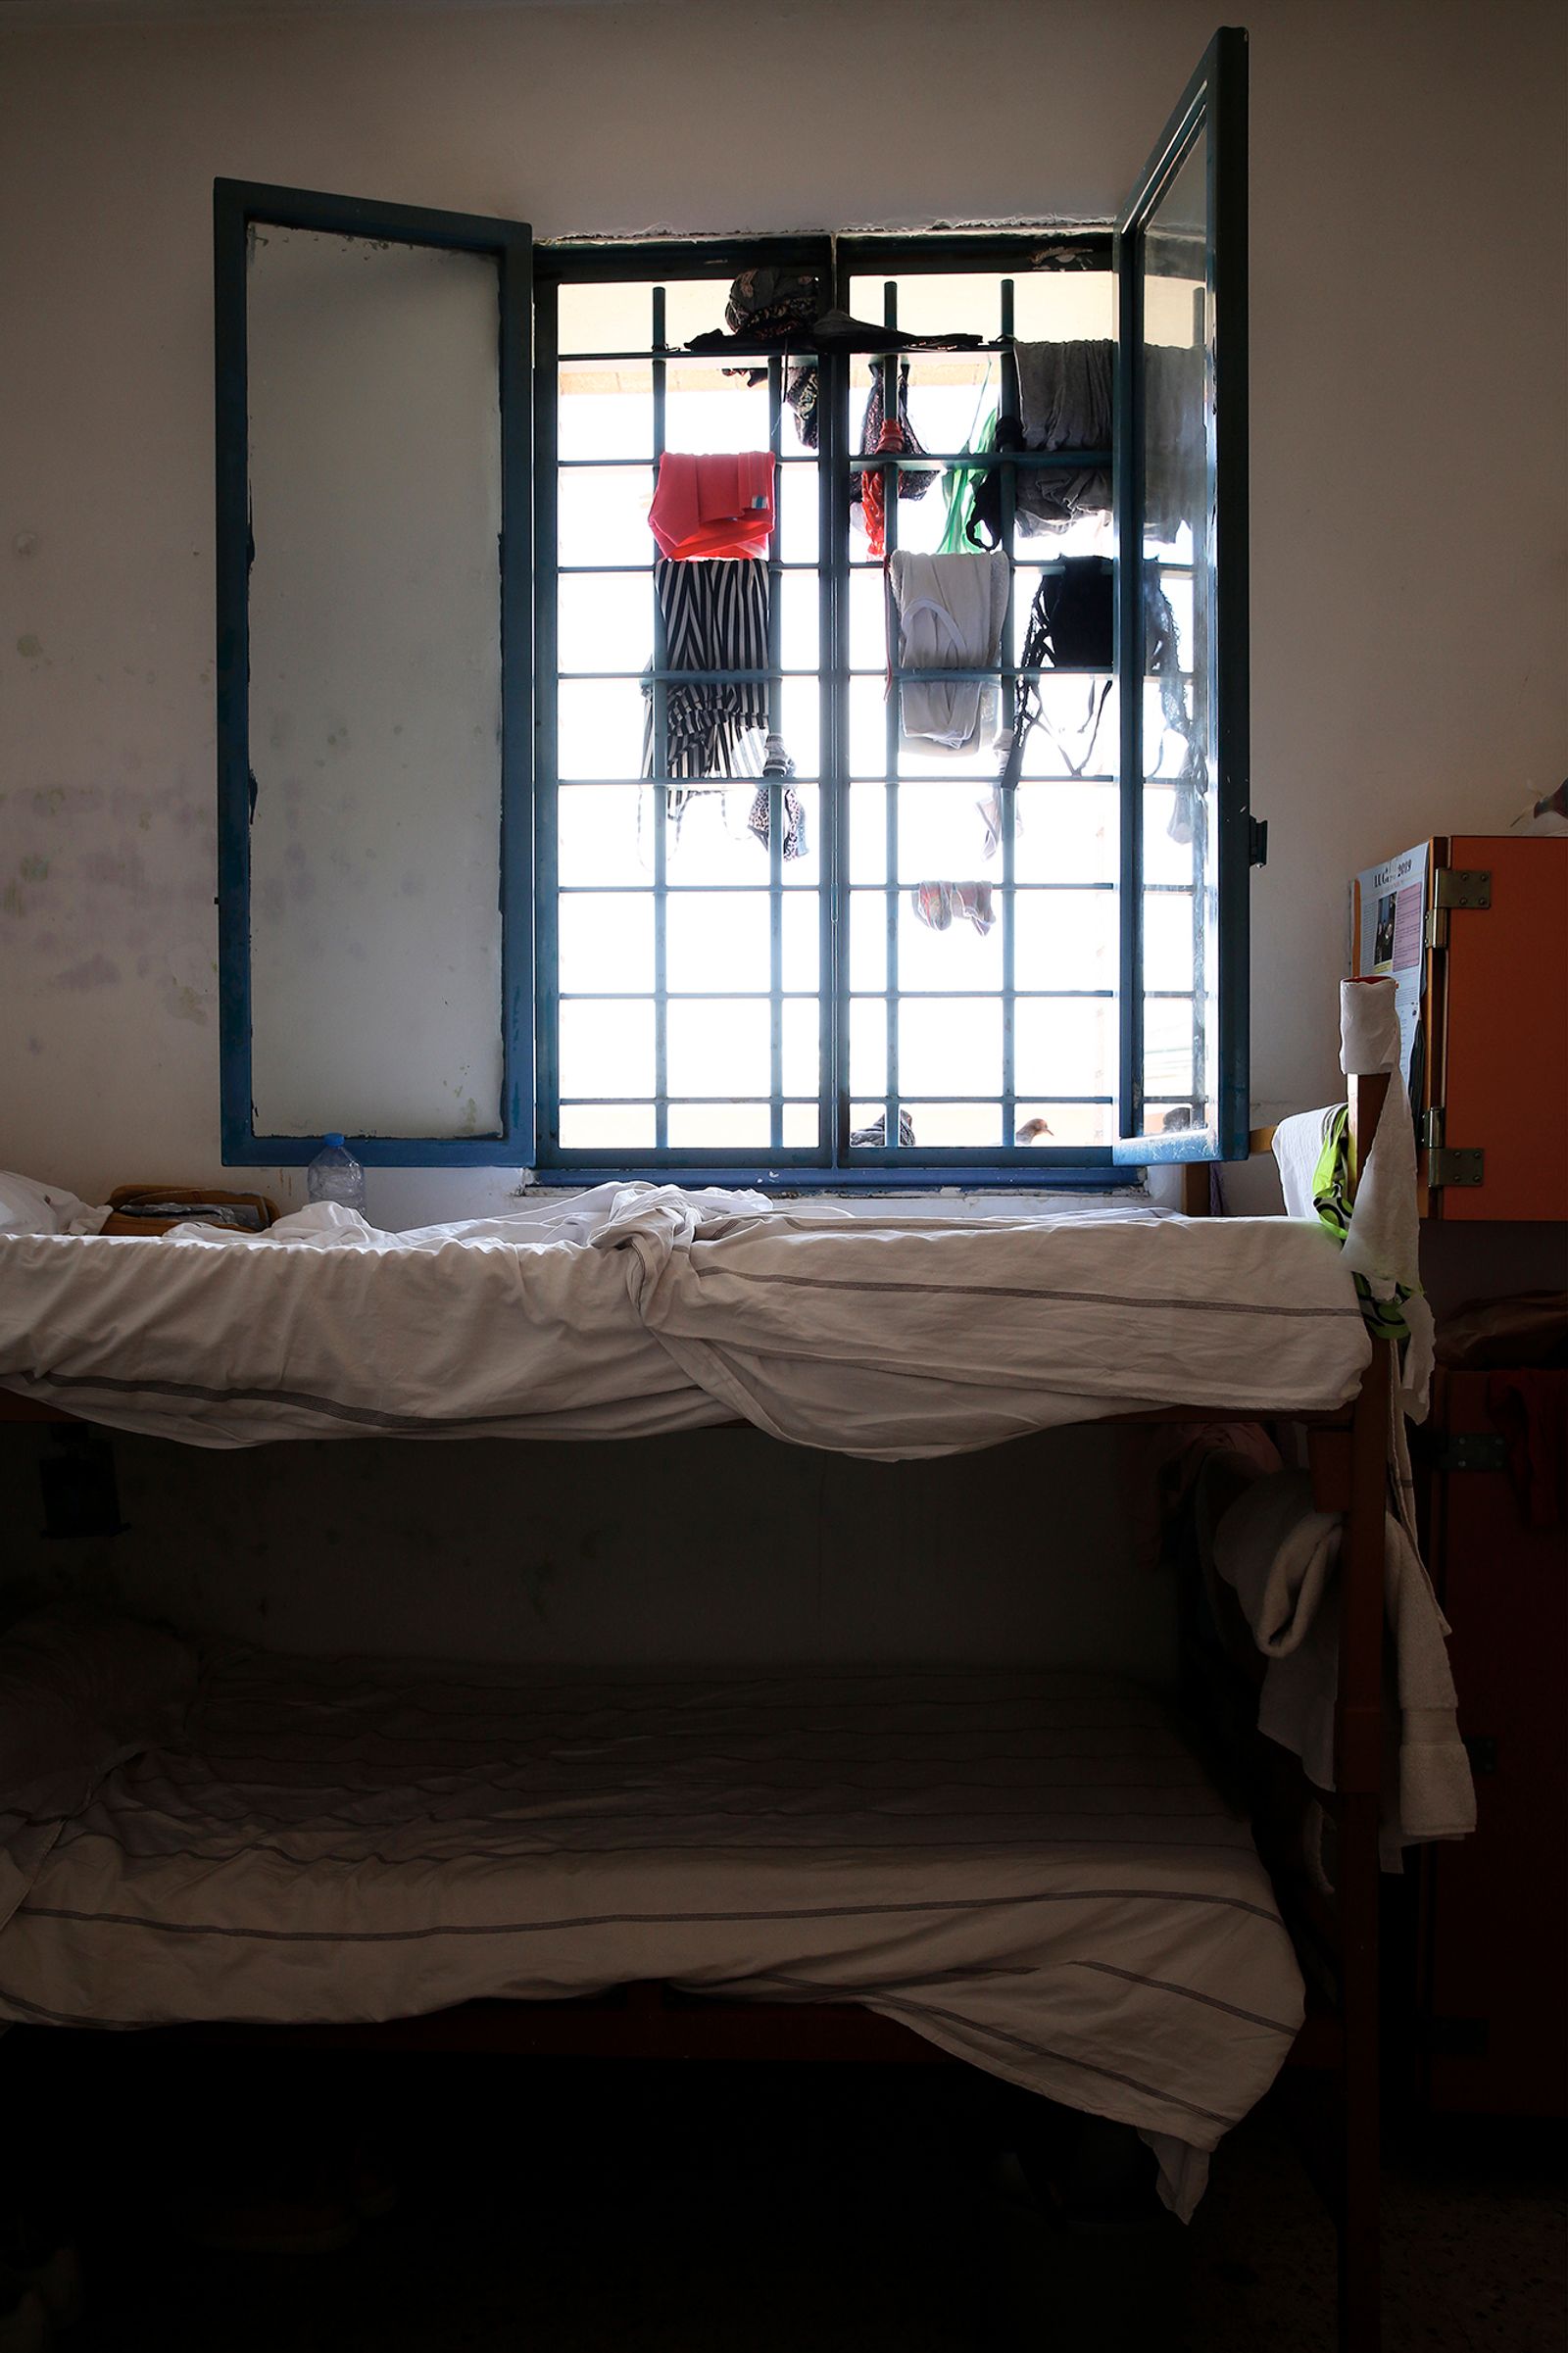 © Francesca Pompei - The corner of a cell in the Camerotti building of the women's section of Rome's Rebibbia prison.